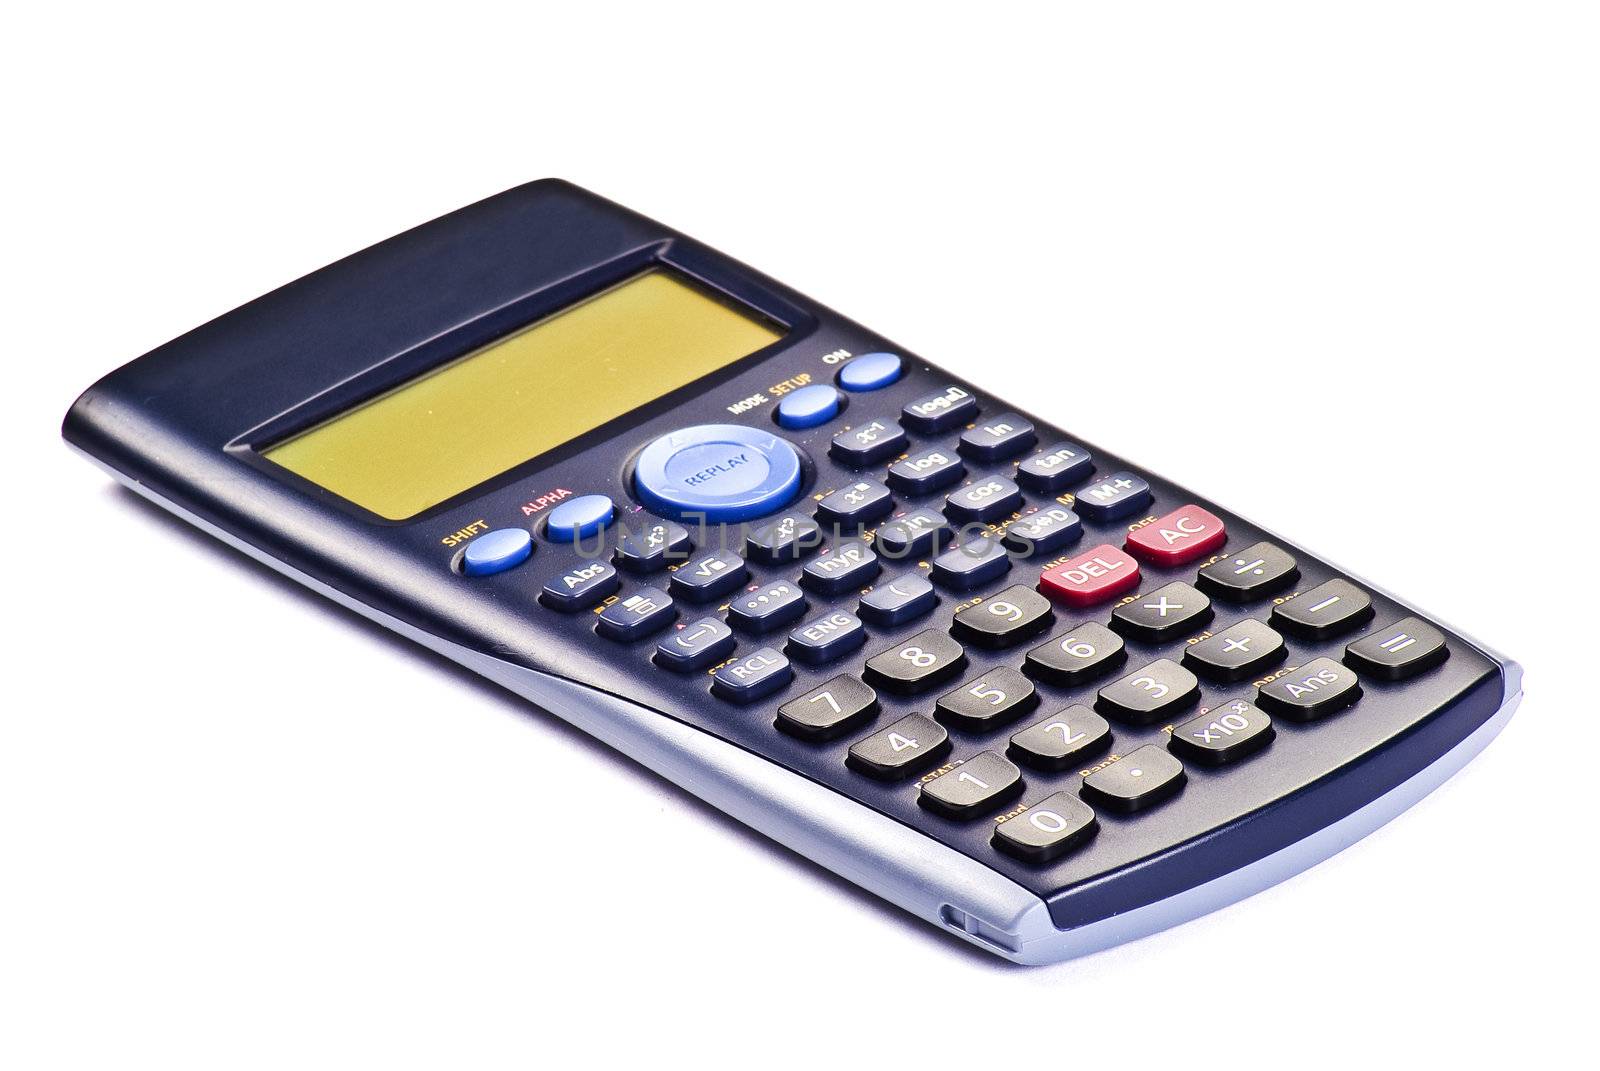 Calculator by caldix